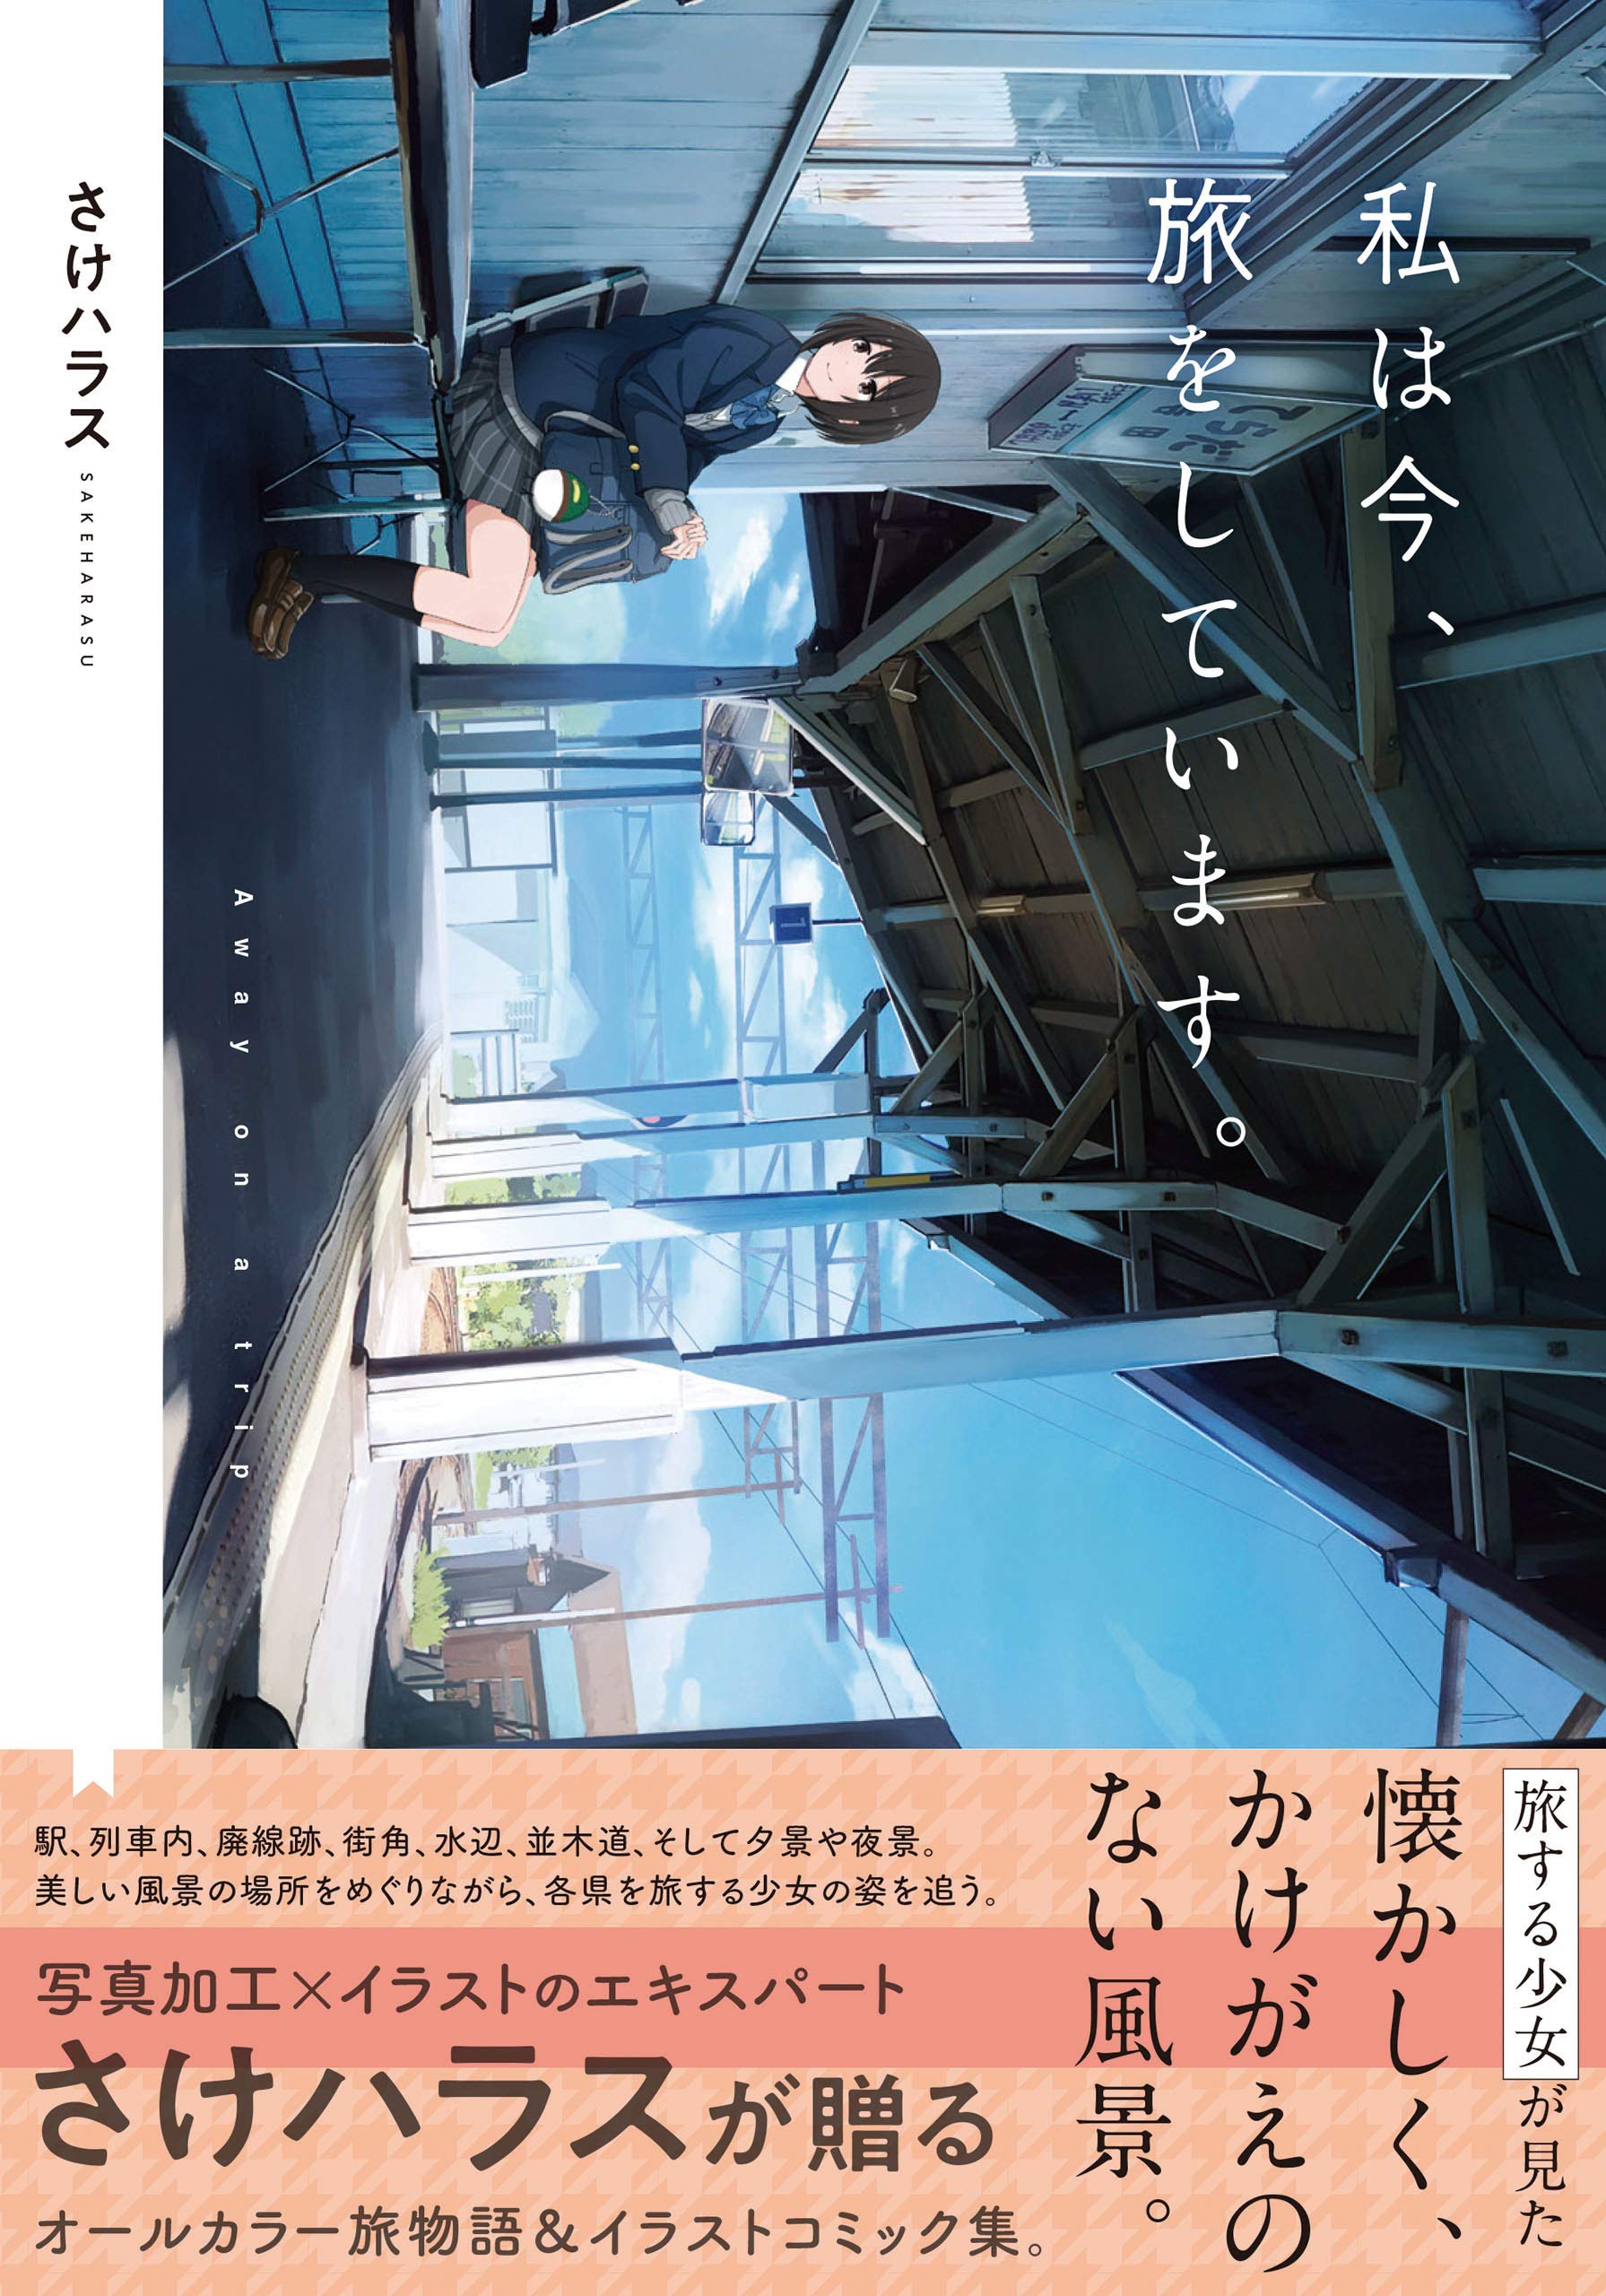 sakeharasu-artbook-i-am-on-journey-monomania